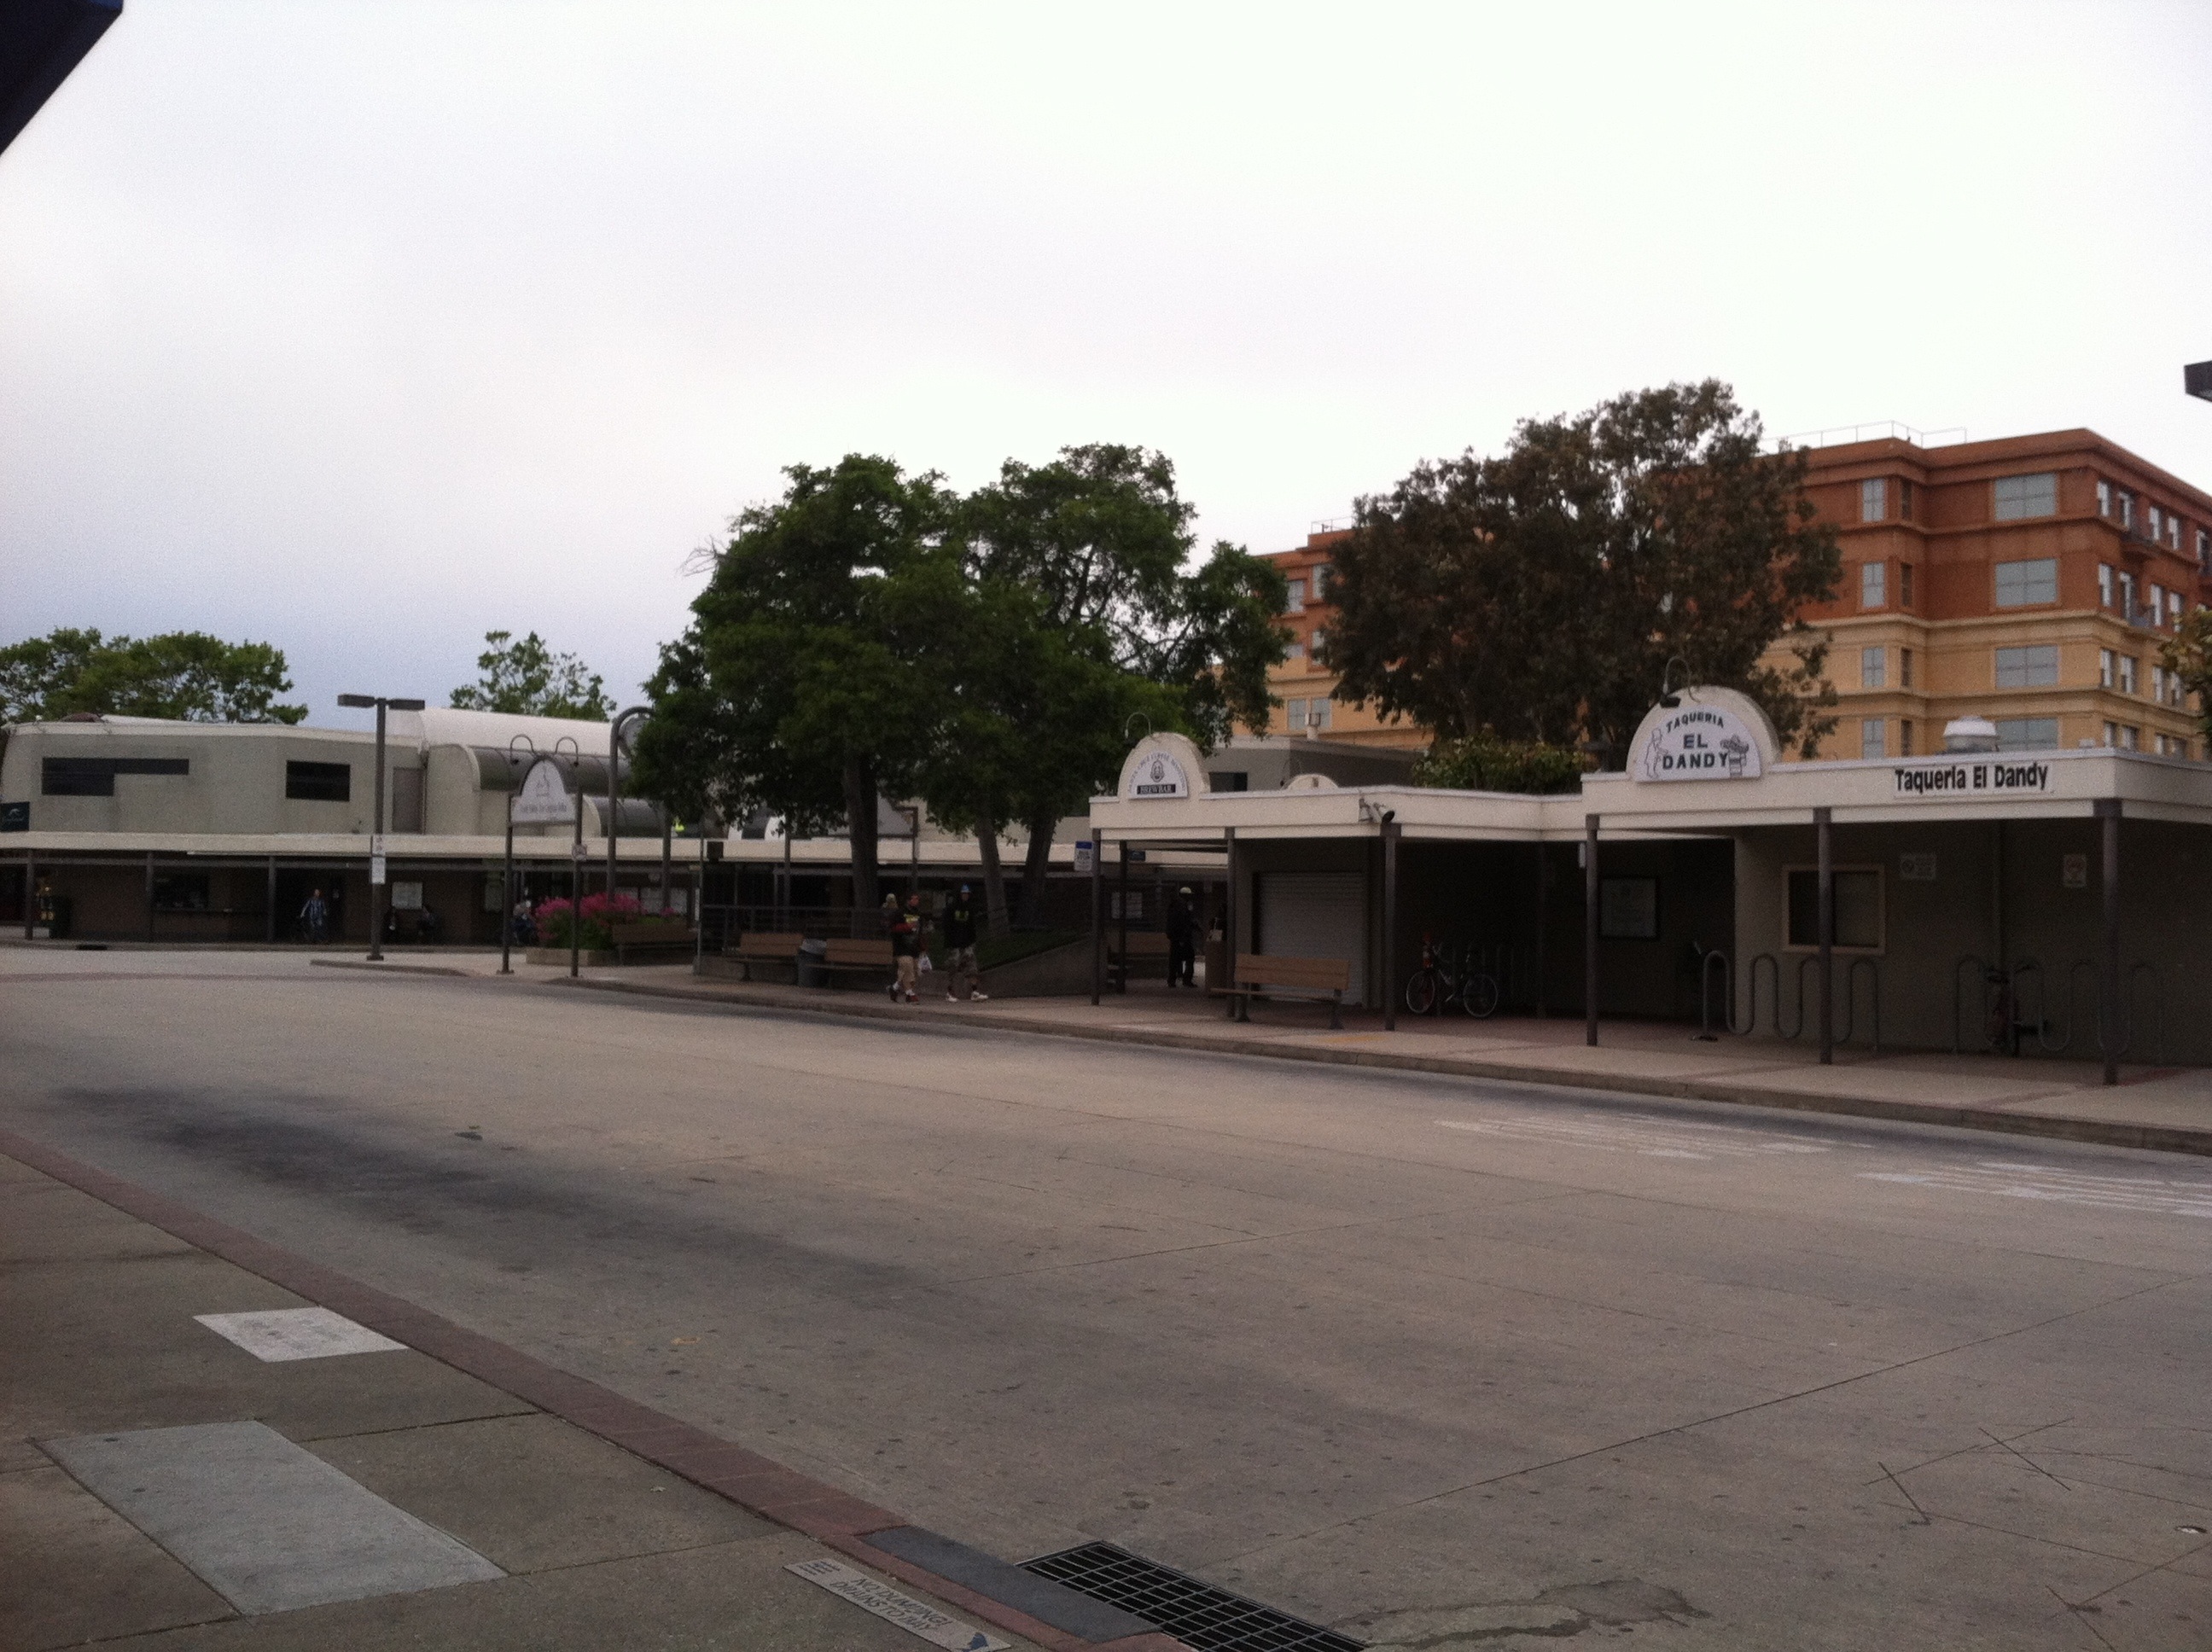 The bus station in Downtown Santa Cruz